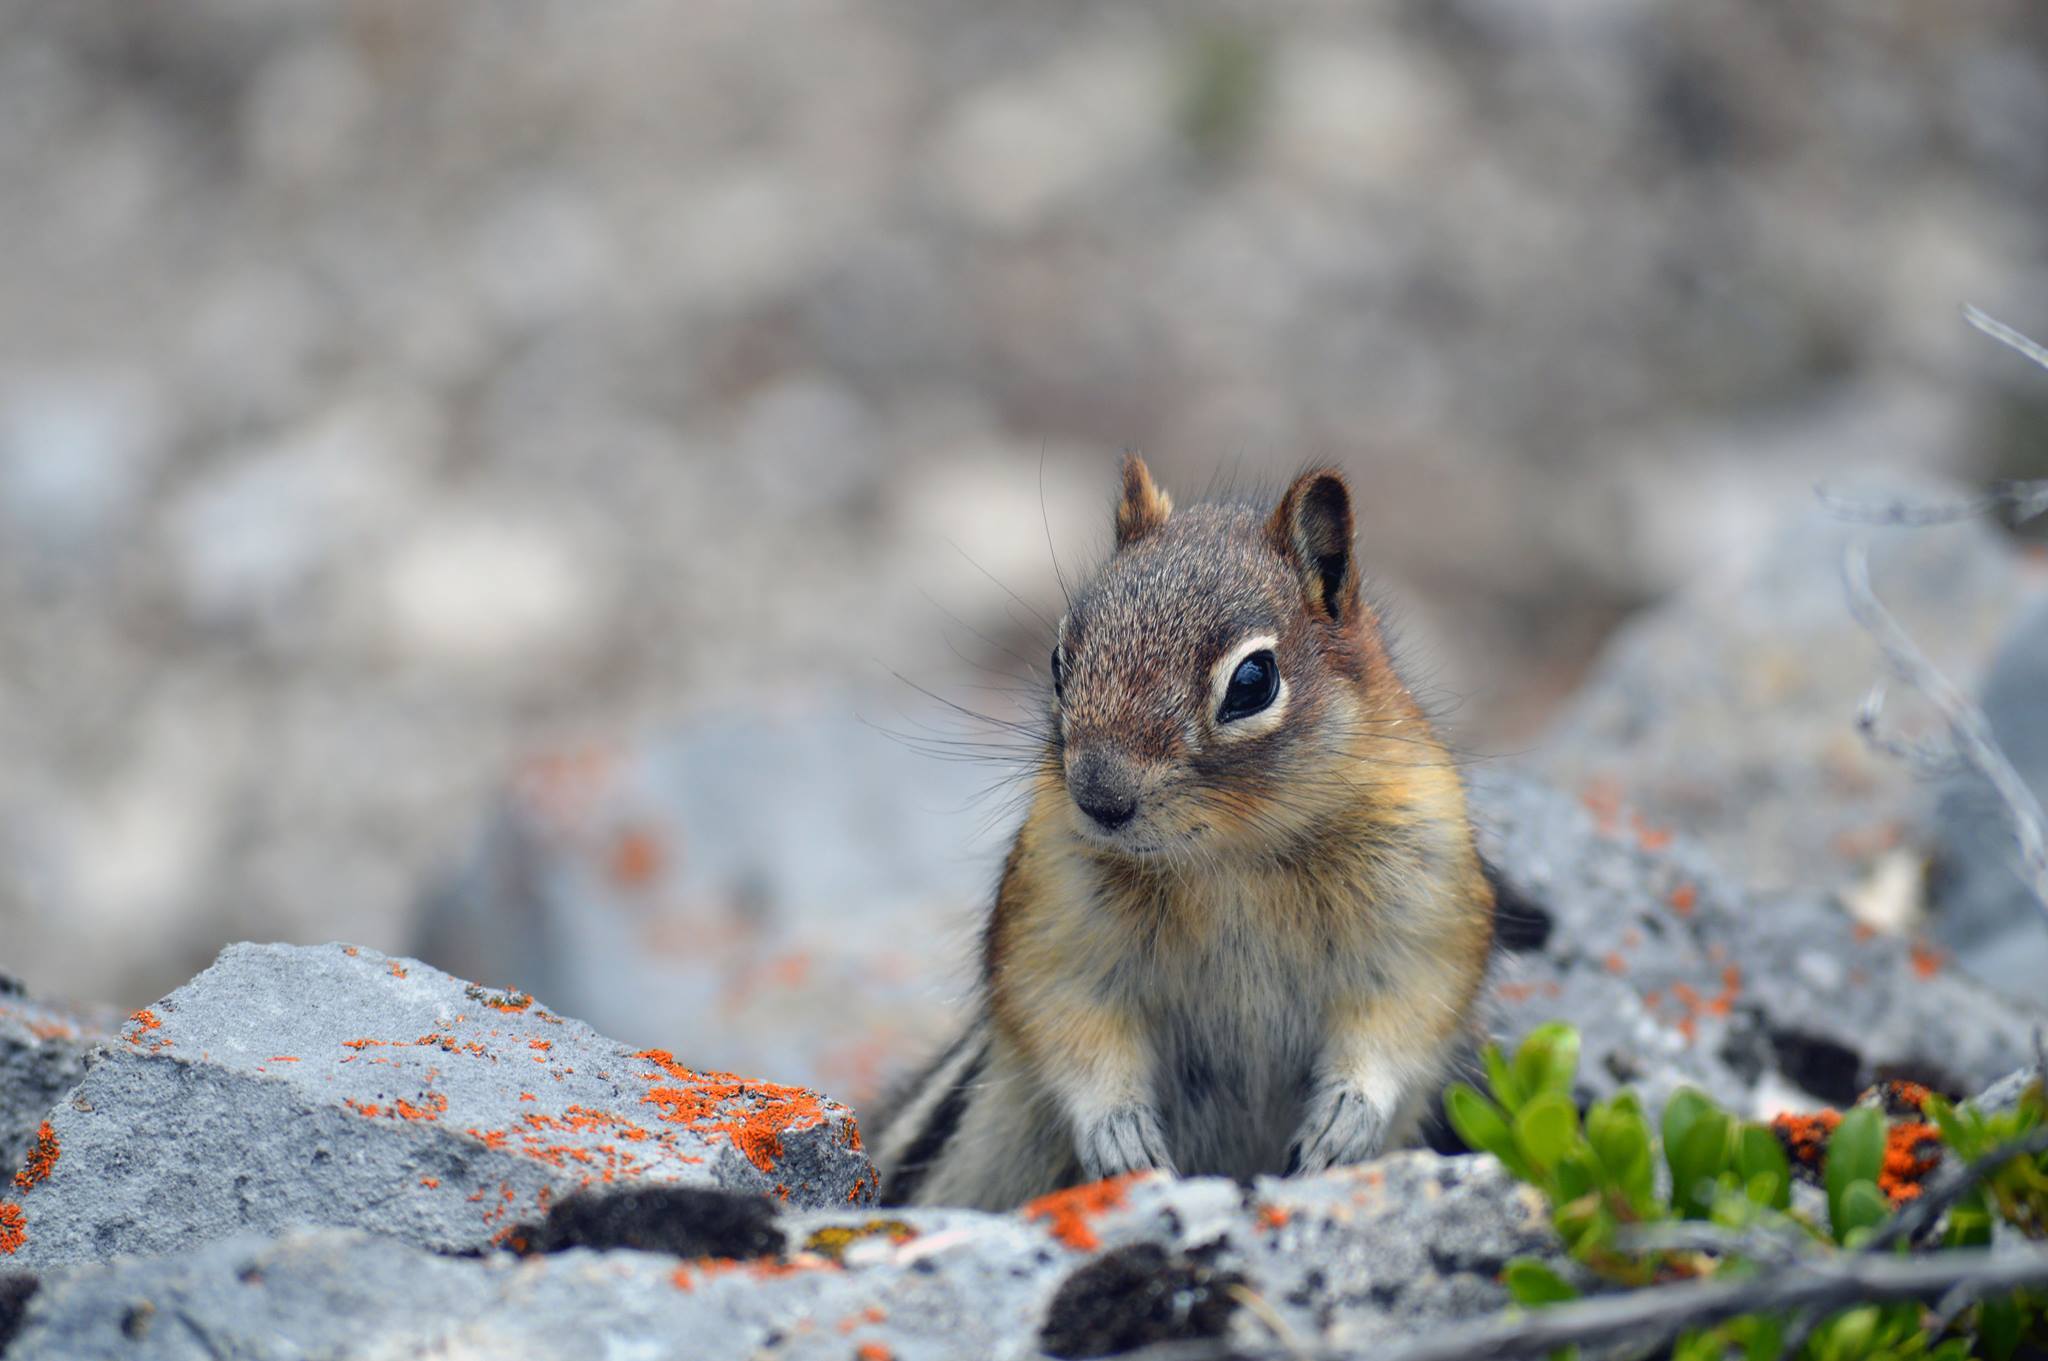 Predator Guard small squirrel on rocks with orange particles